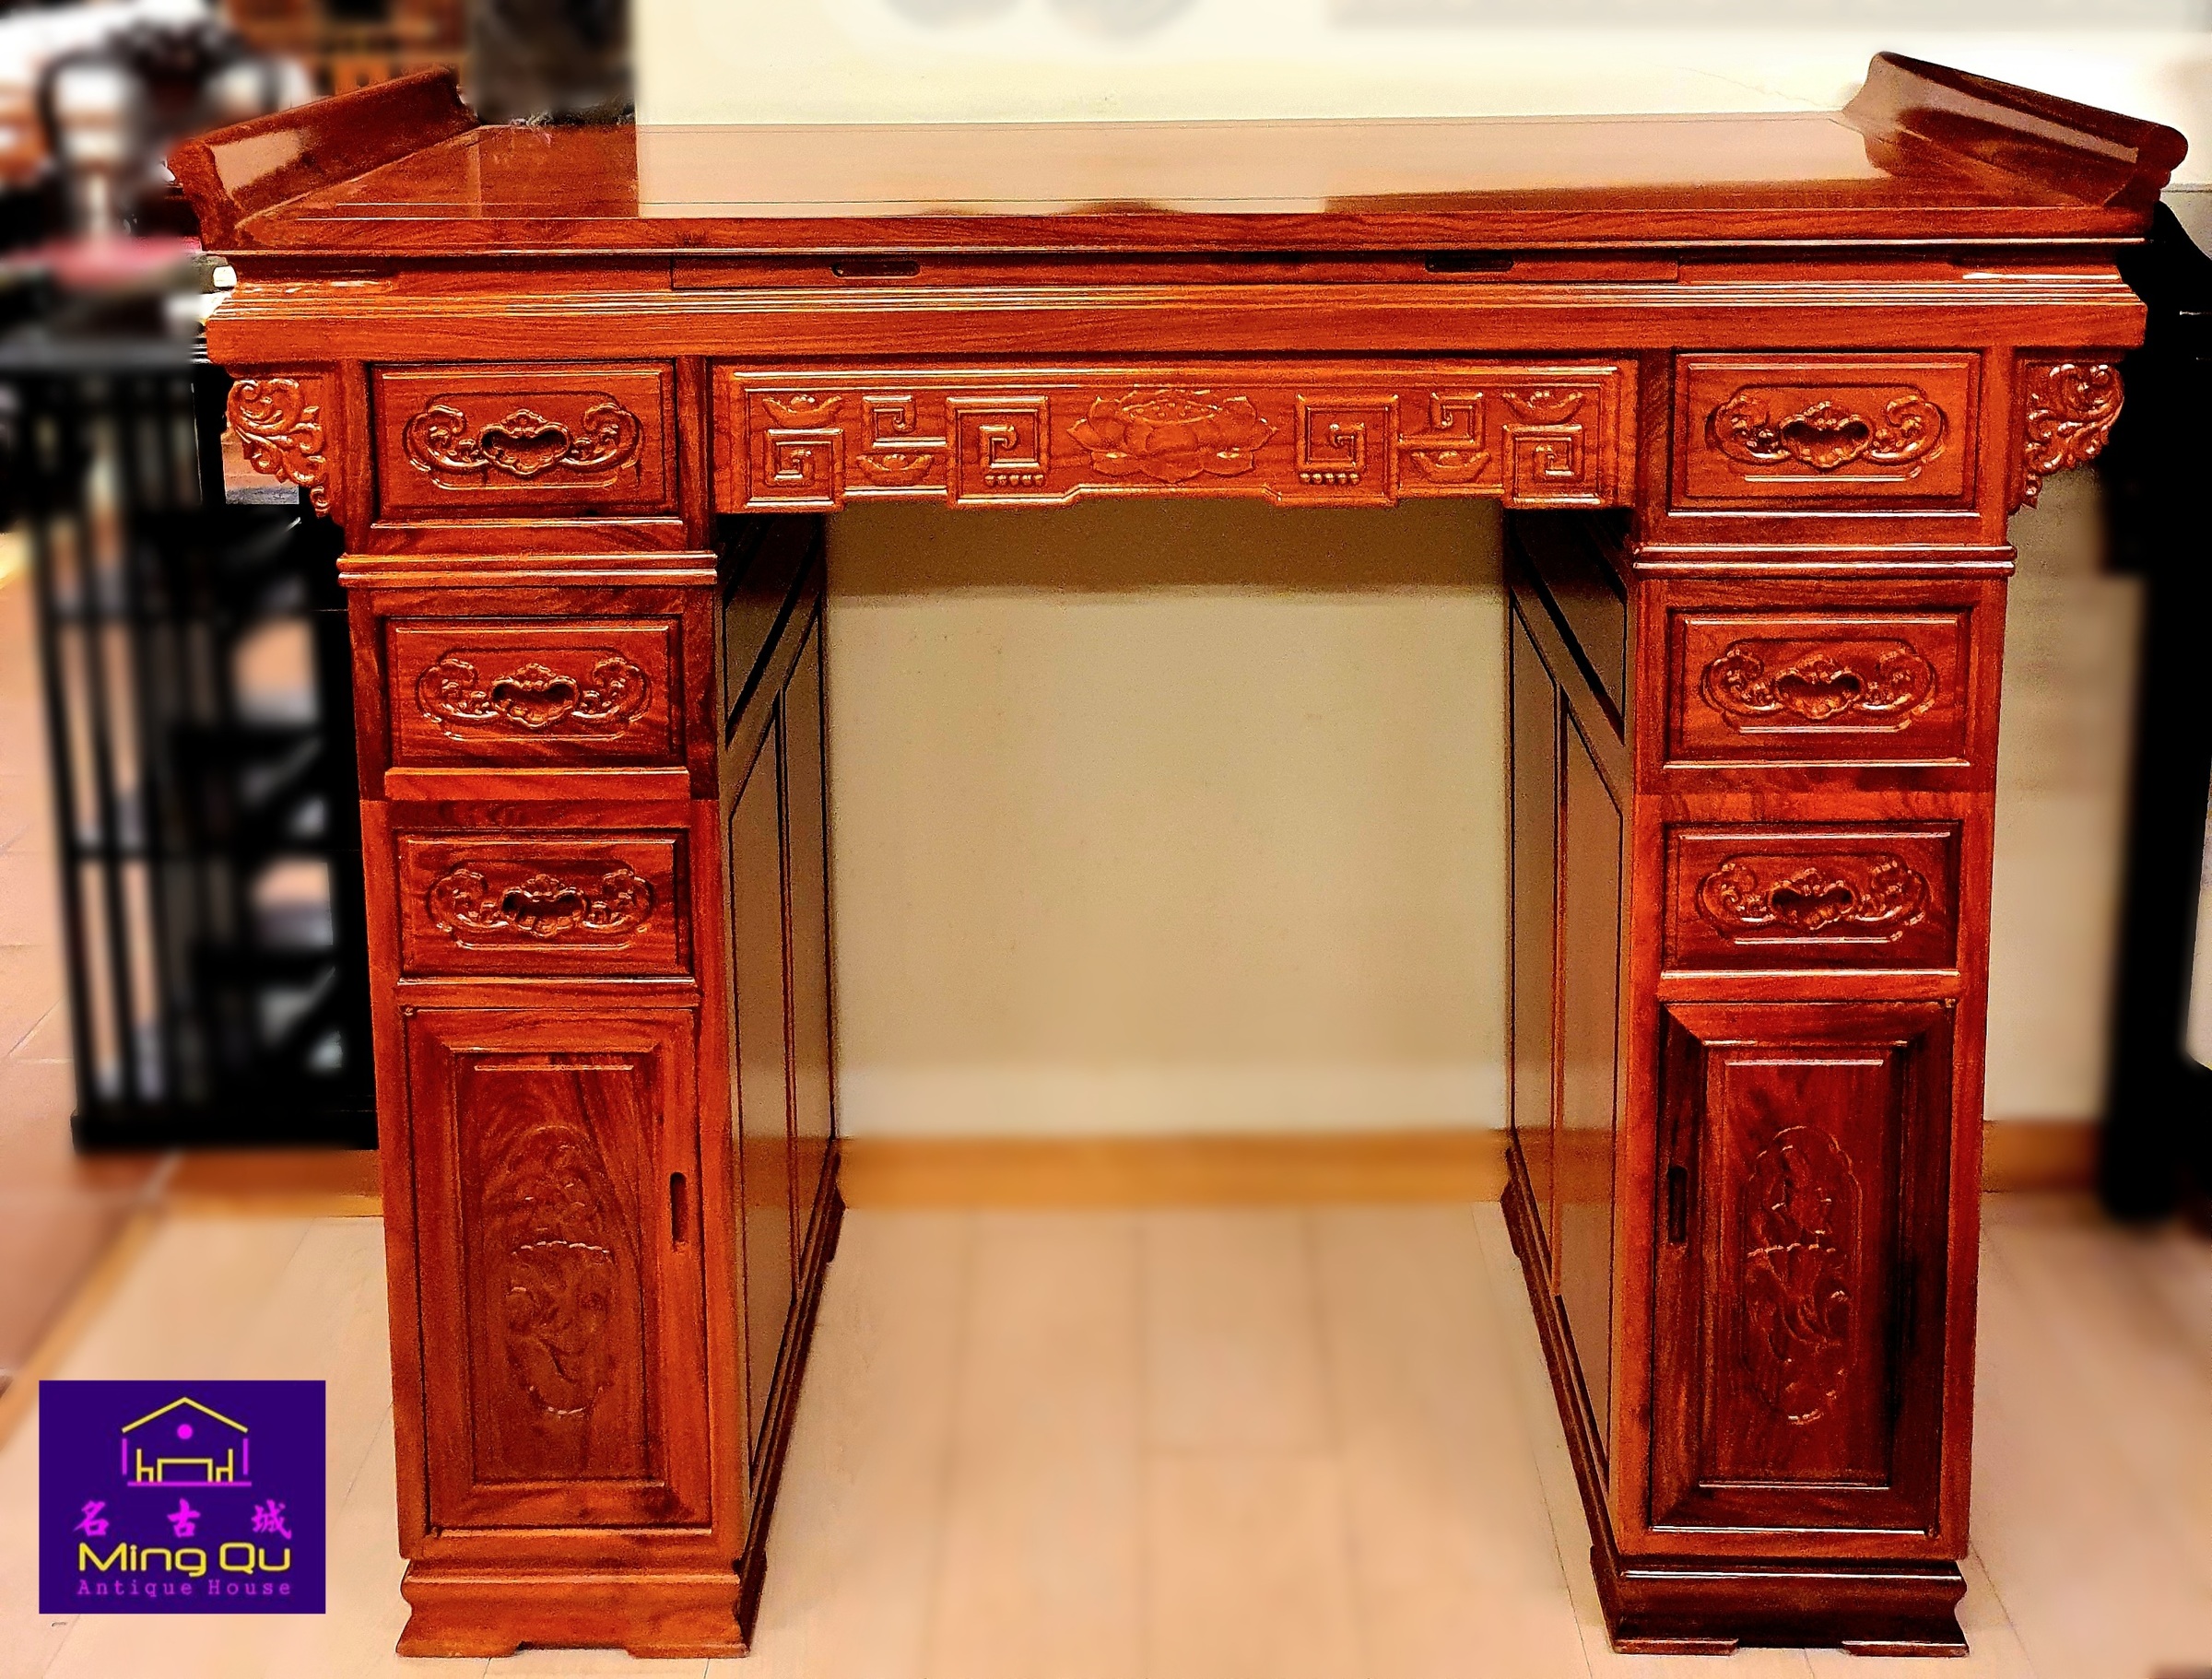 CW Zitan wood JMG 154cm Altar Table 刺猬紫檀木JMG154公分神枱– Ming